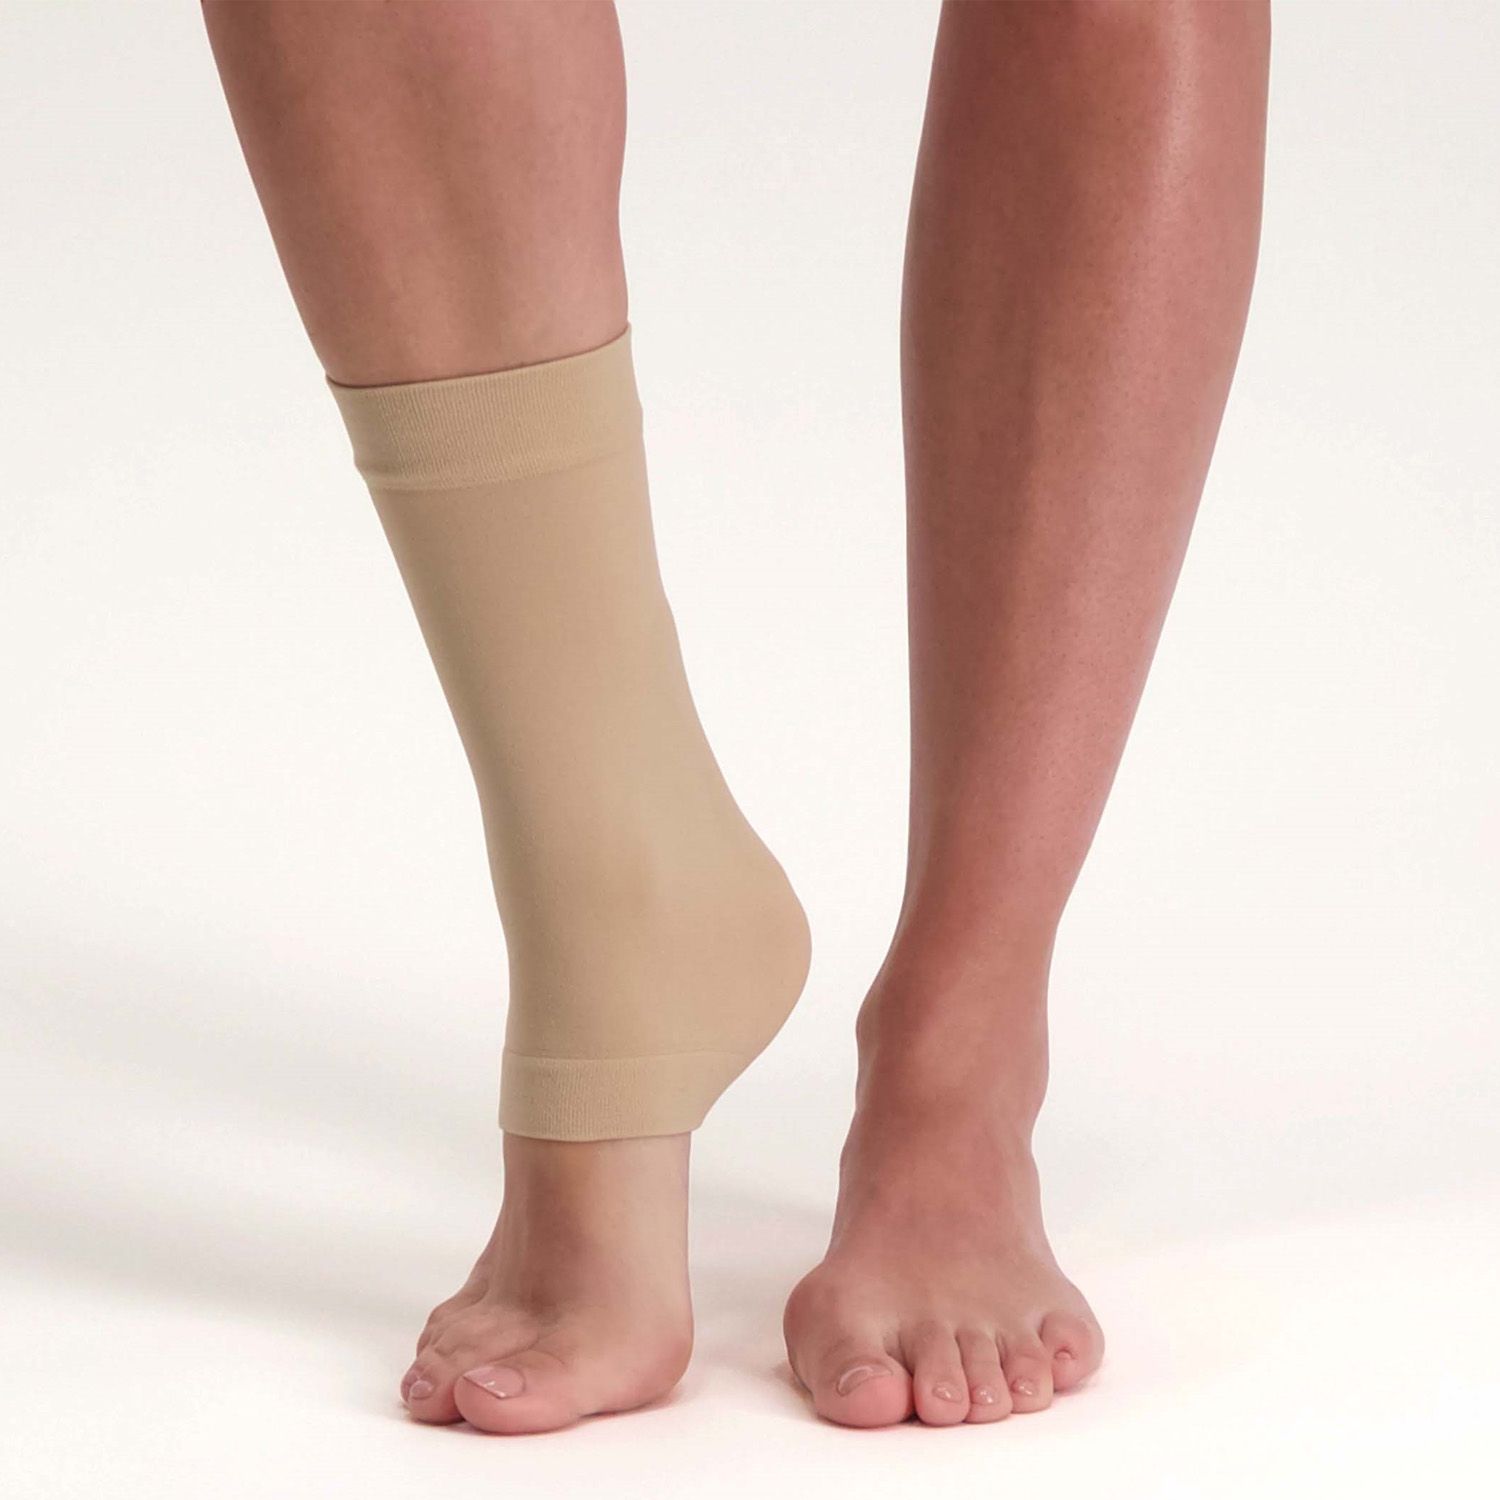 solelution achilles tendon gel sock side view